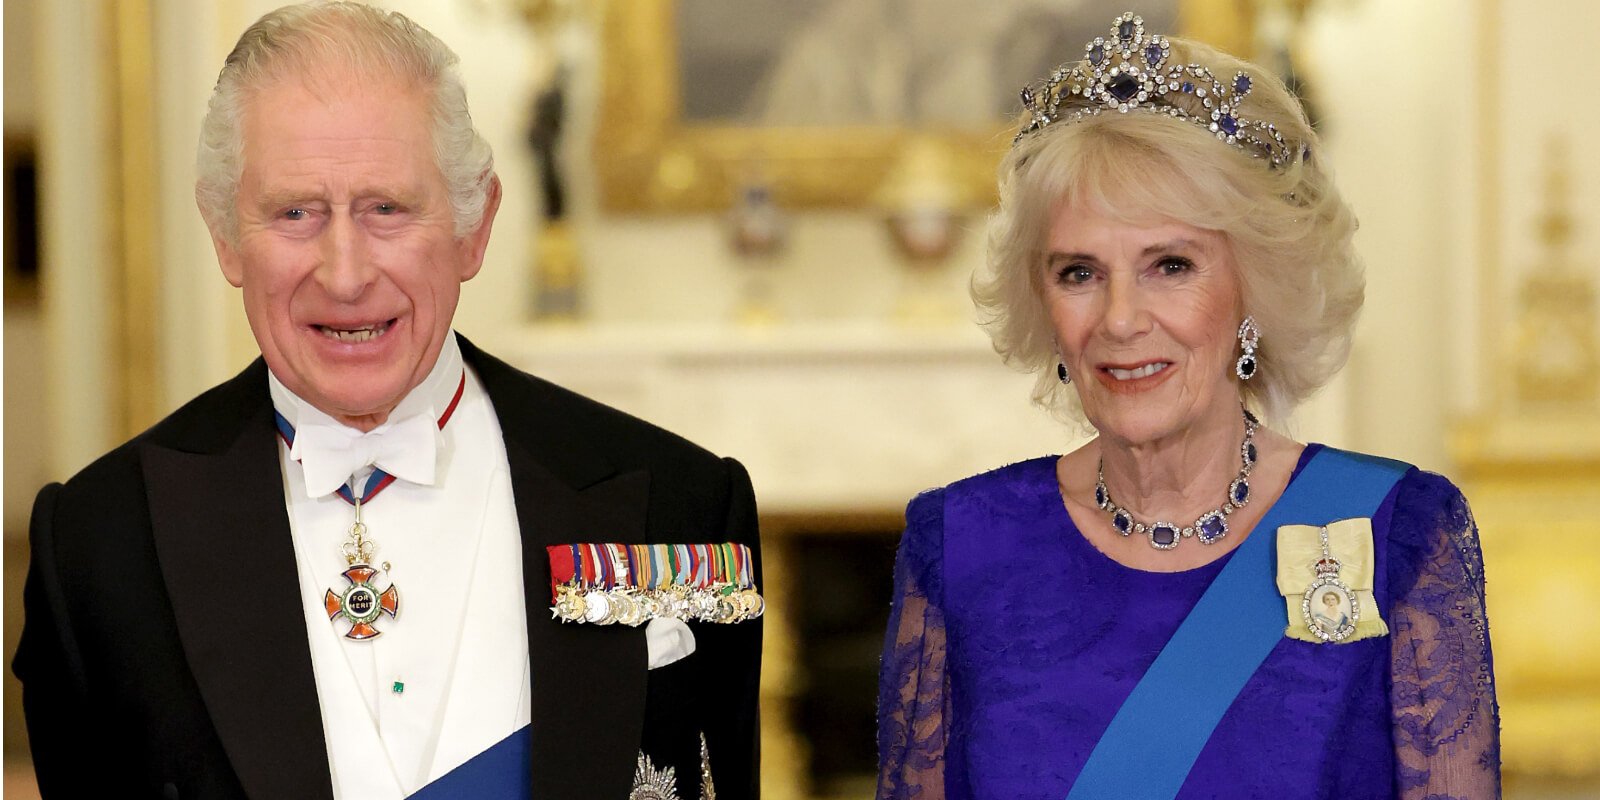 King Charles III and Camilla Parker Bowles at during the State Banquet at Buckingham Palace on November 22, 2022.